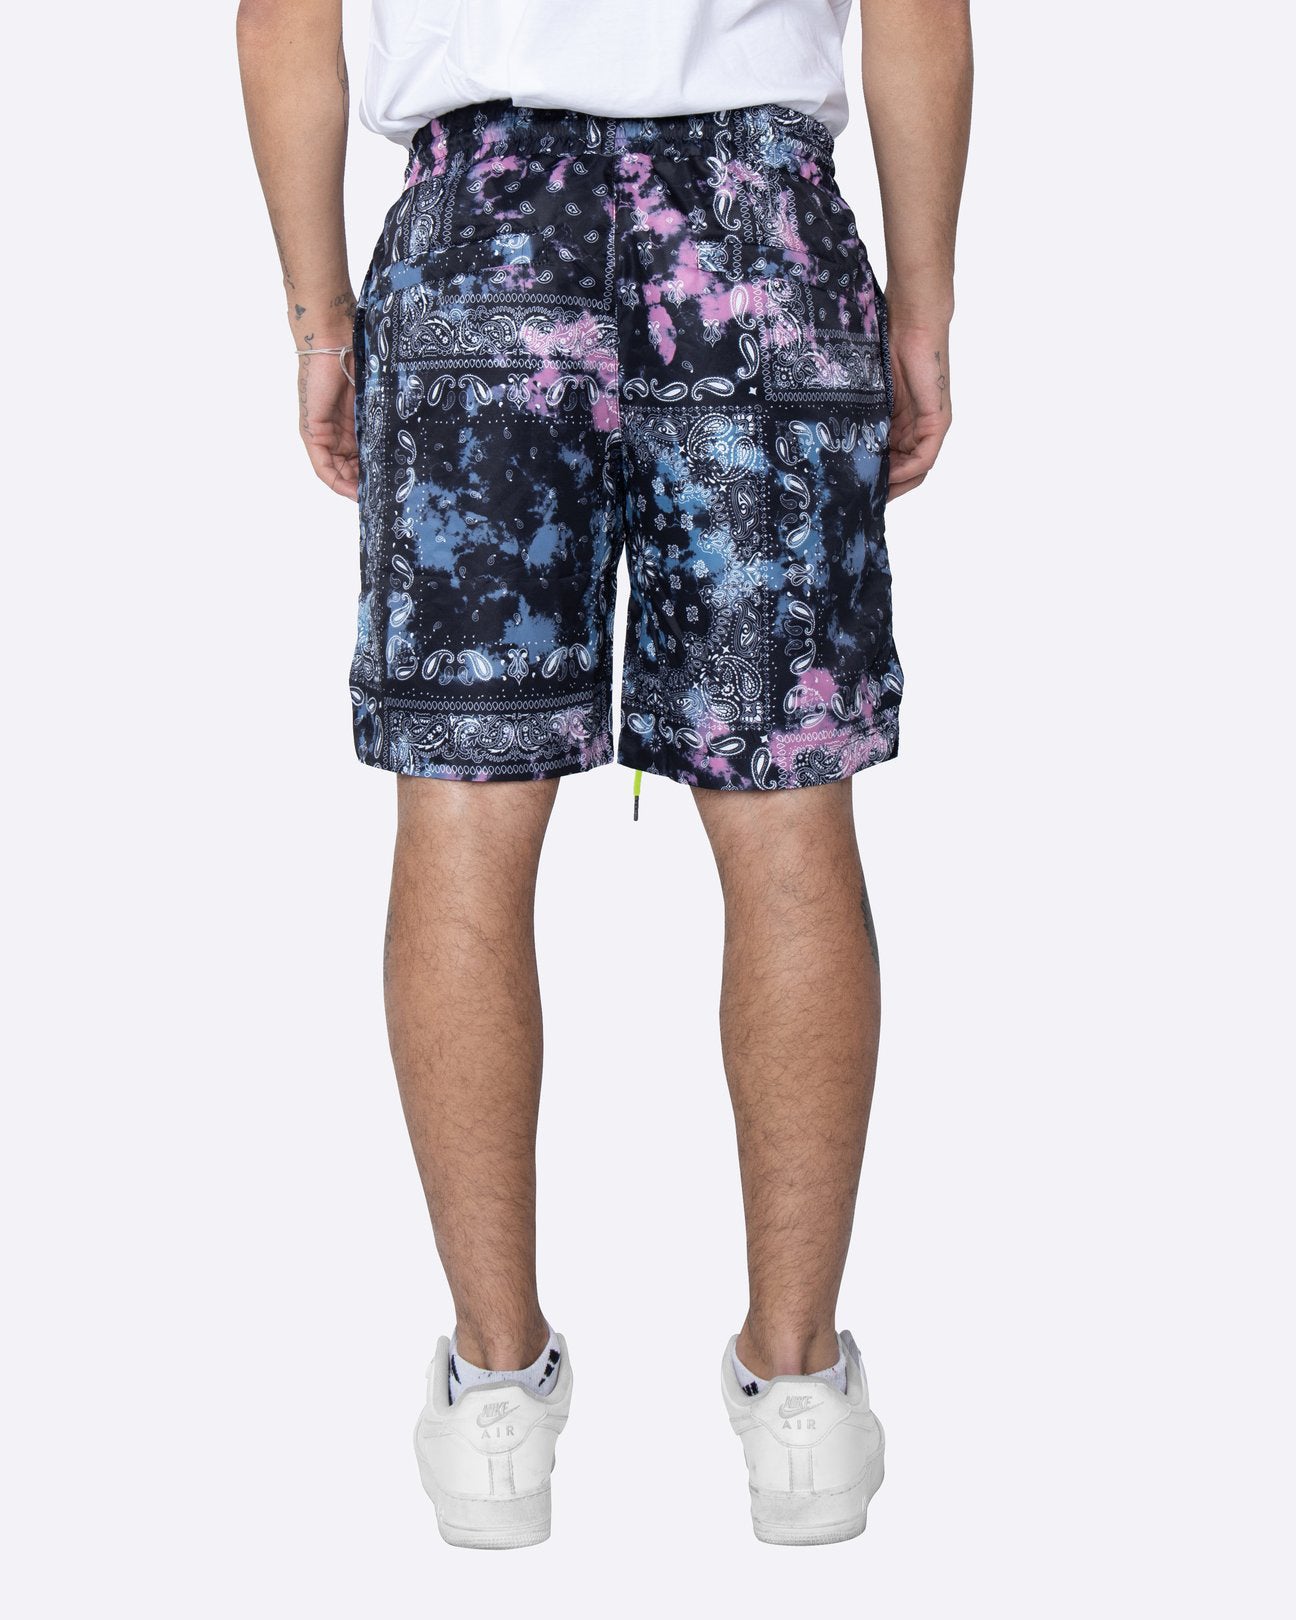 Loose Cashew Flower Shorts European And American Hong Kong Style Casual Basketball Hip-hop Beach Pants